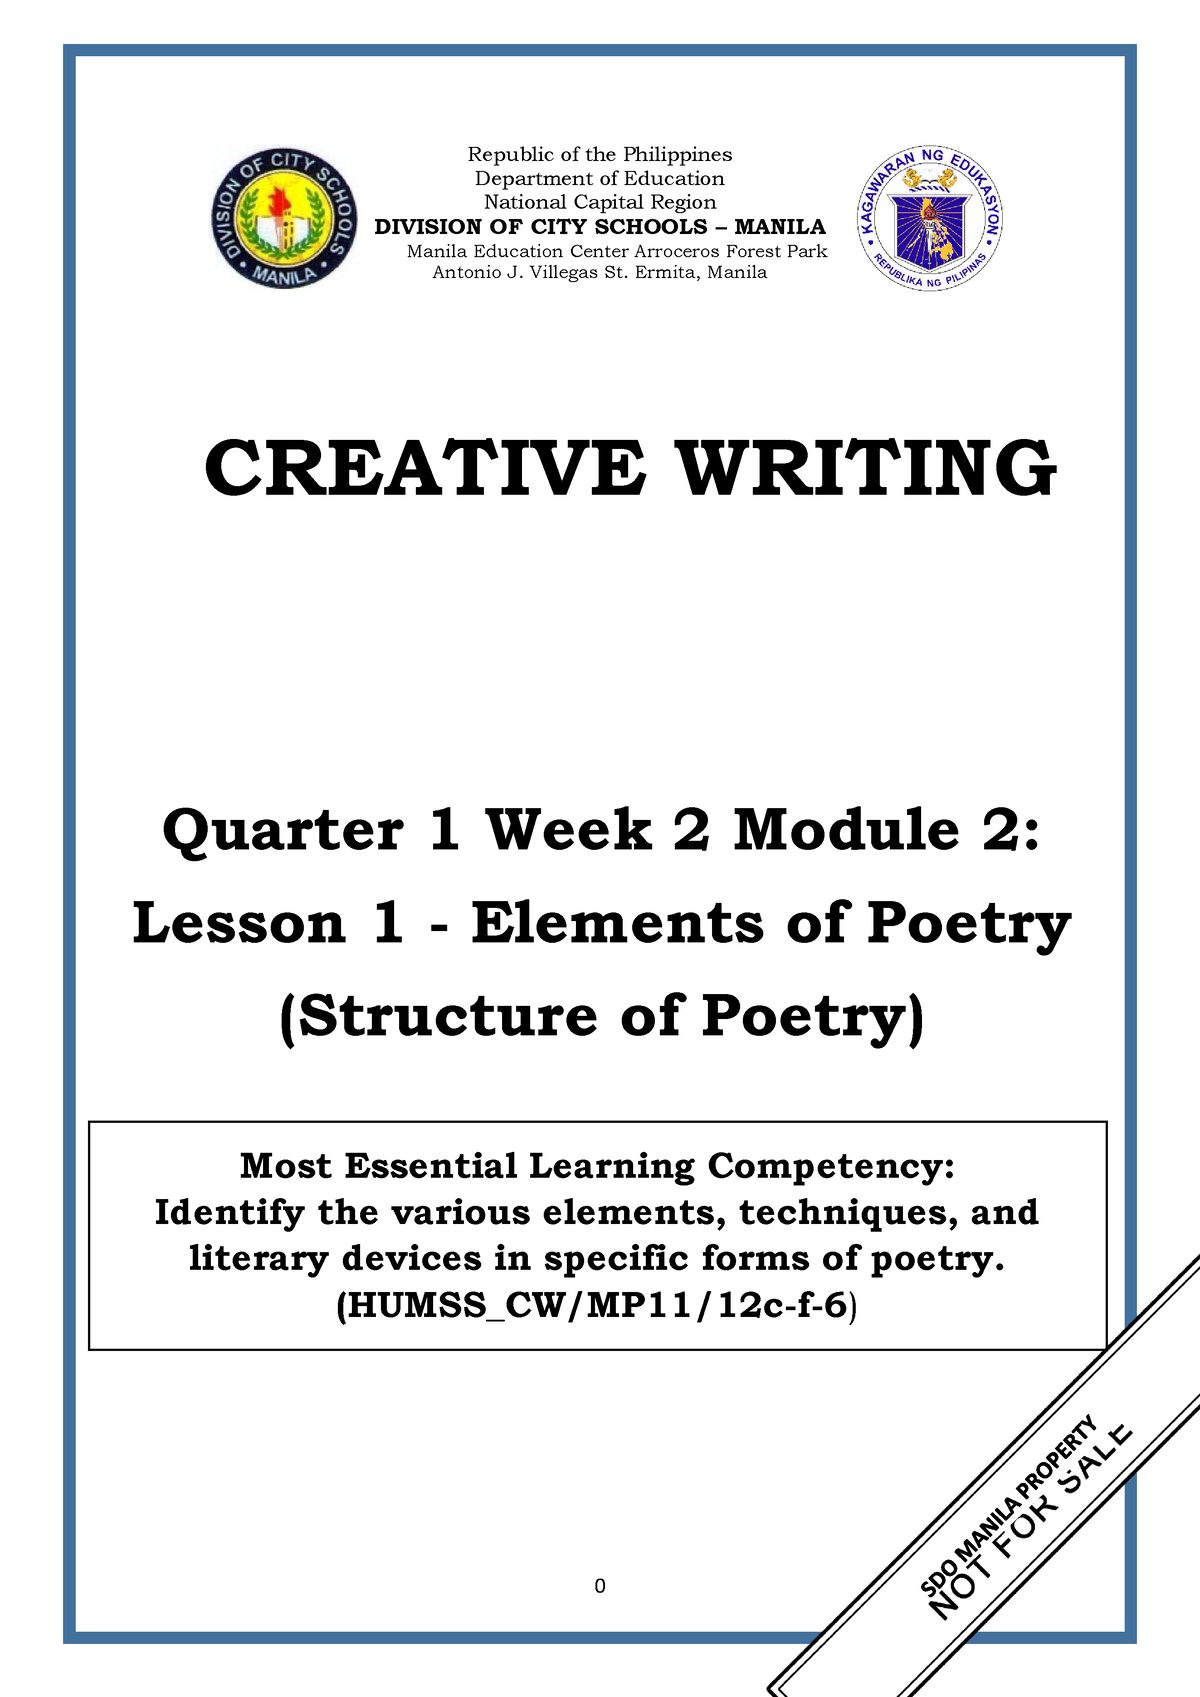 creative writing module quarter 1